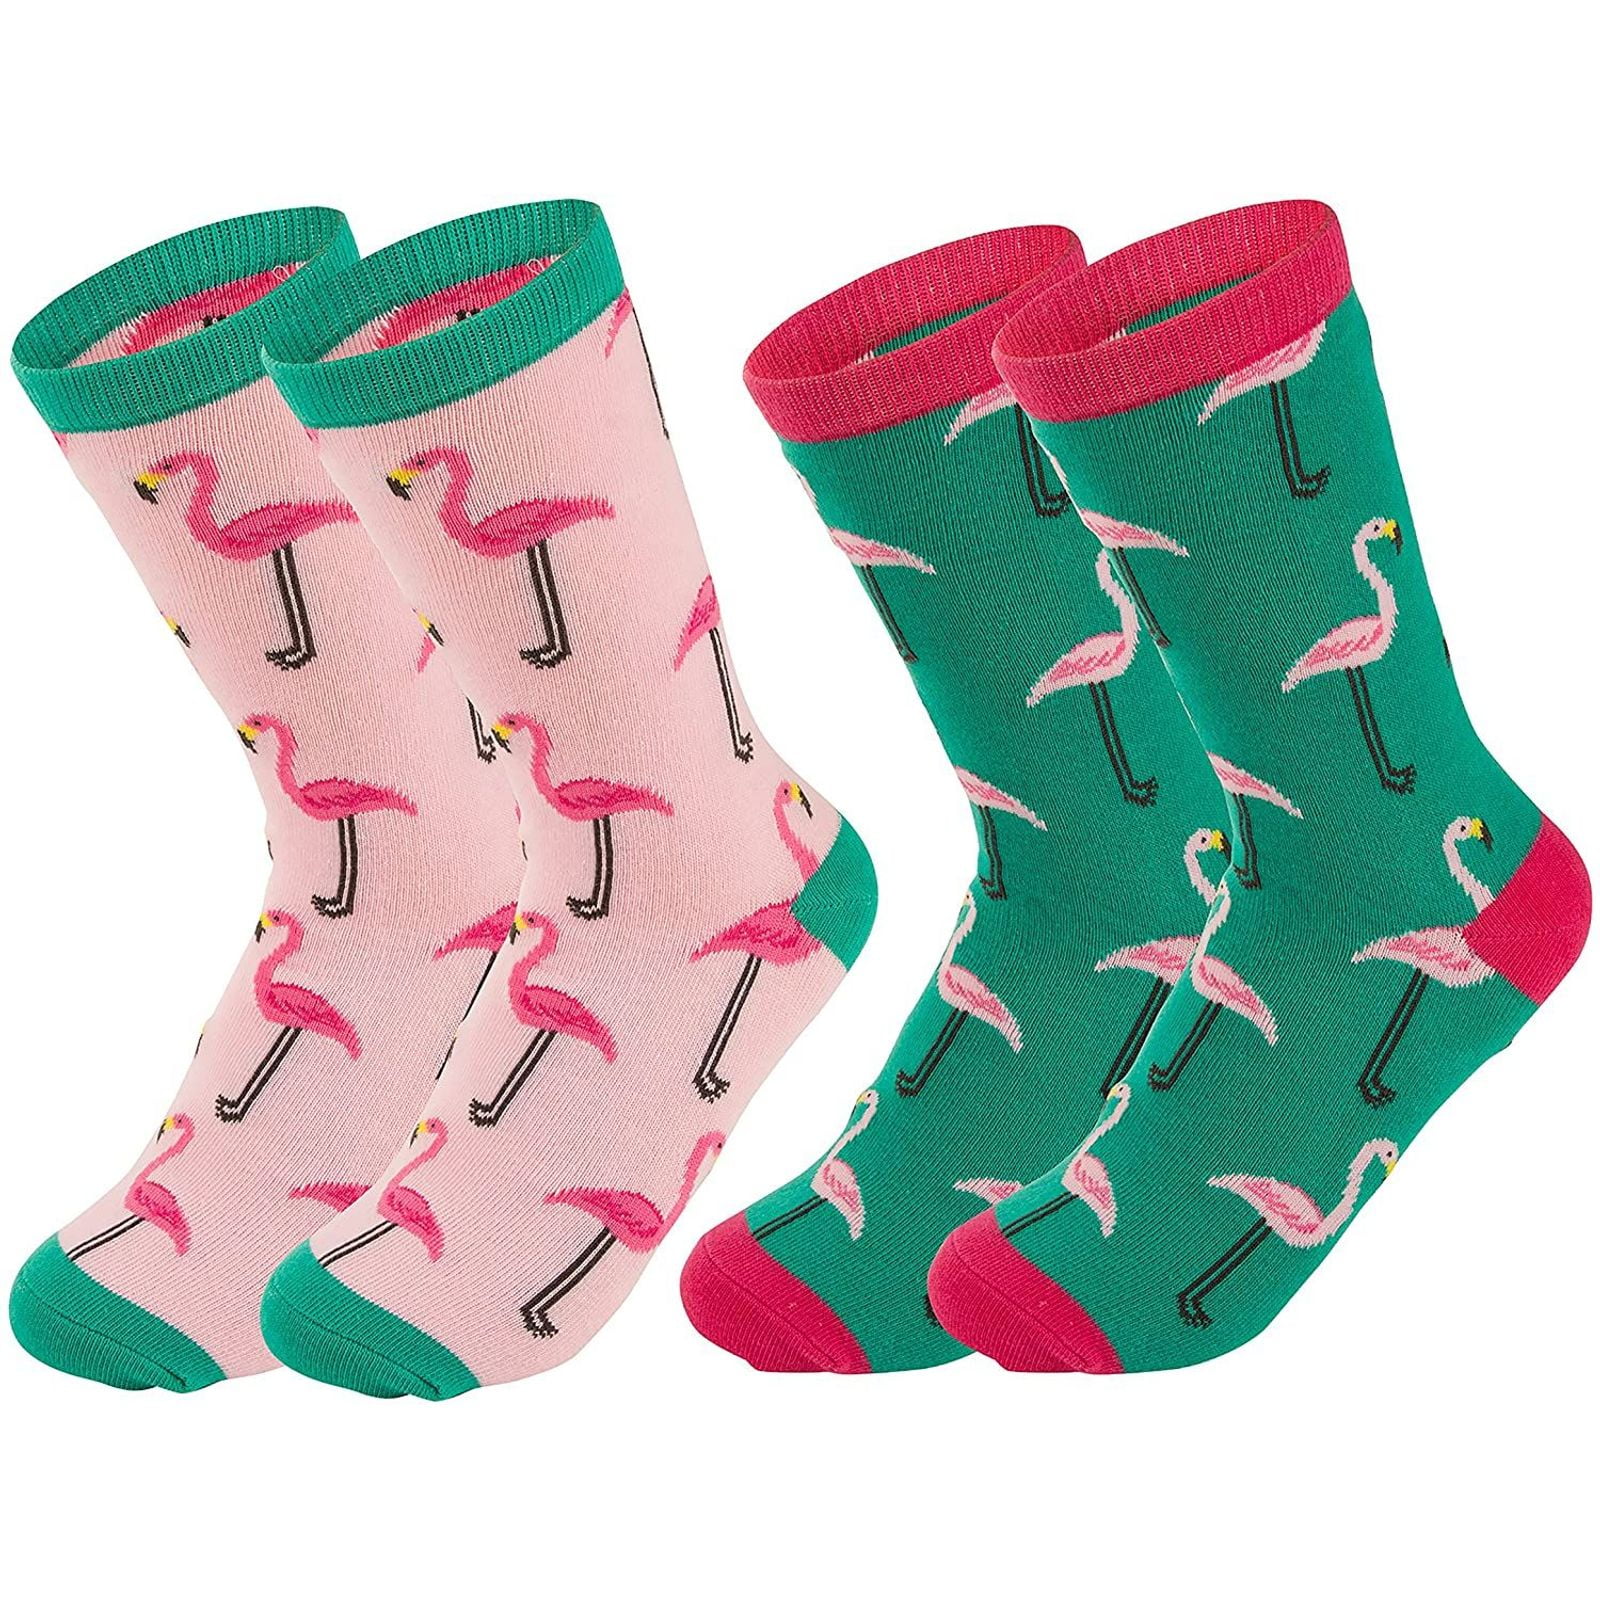 Flamingoes Unisex Funny Casual Crew Socks Athletic Socks For Boys Girls Kids Teenagers